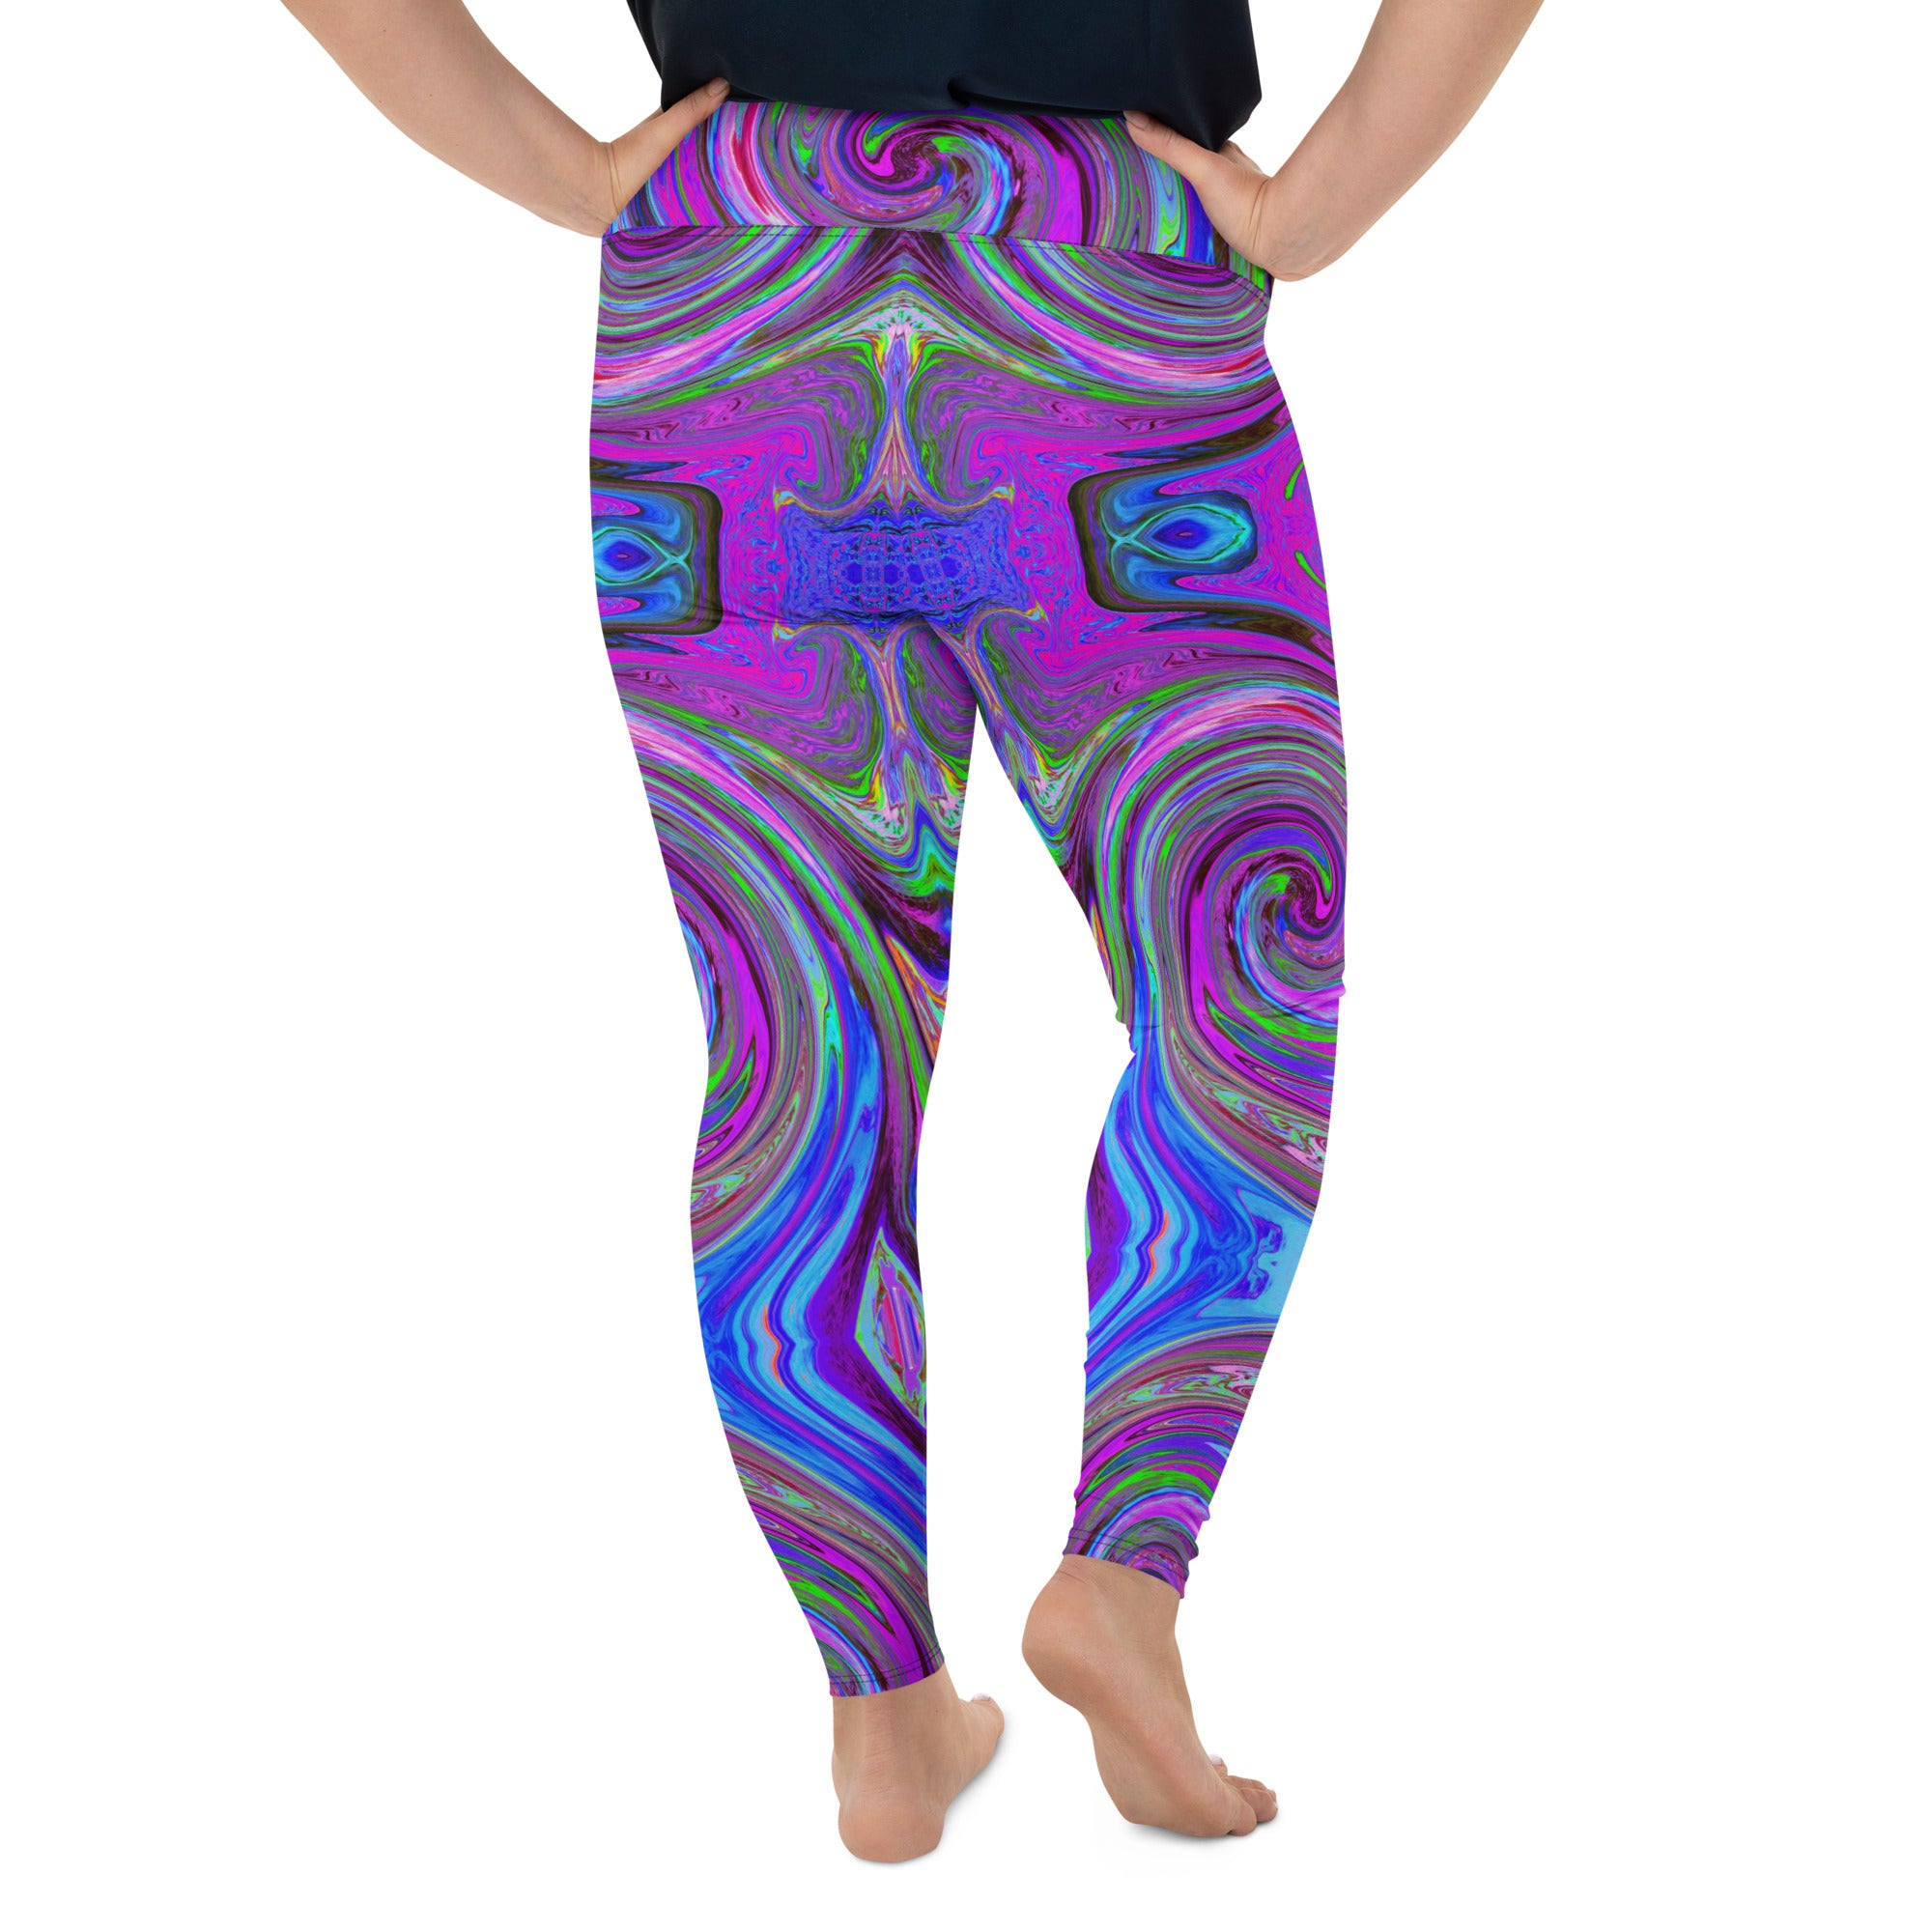 Plus Size Leggings - Colorful Magenta Swirl Retro Abstract Design